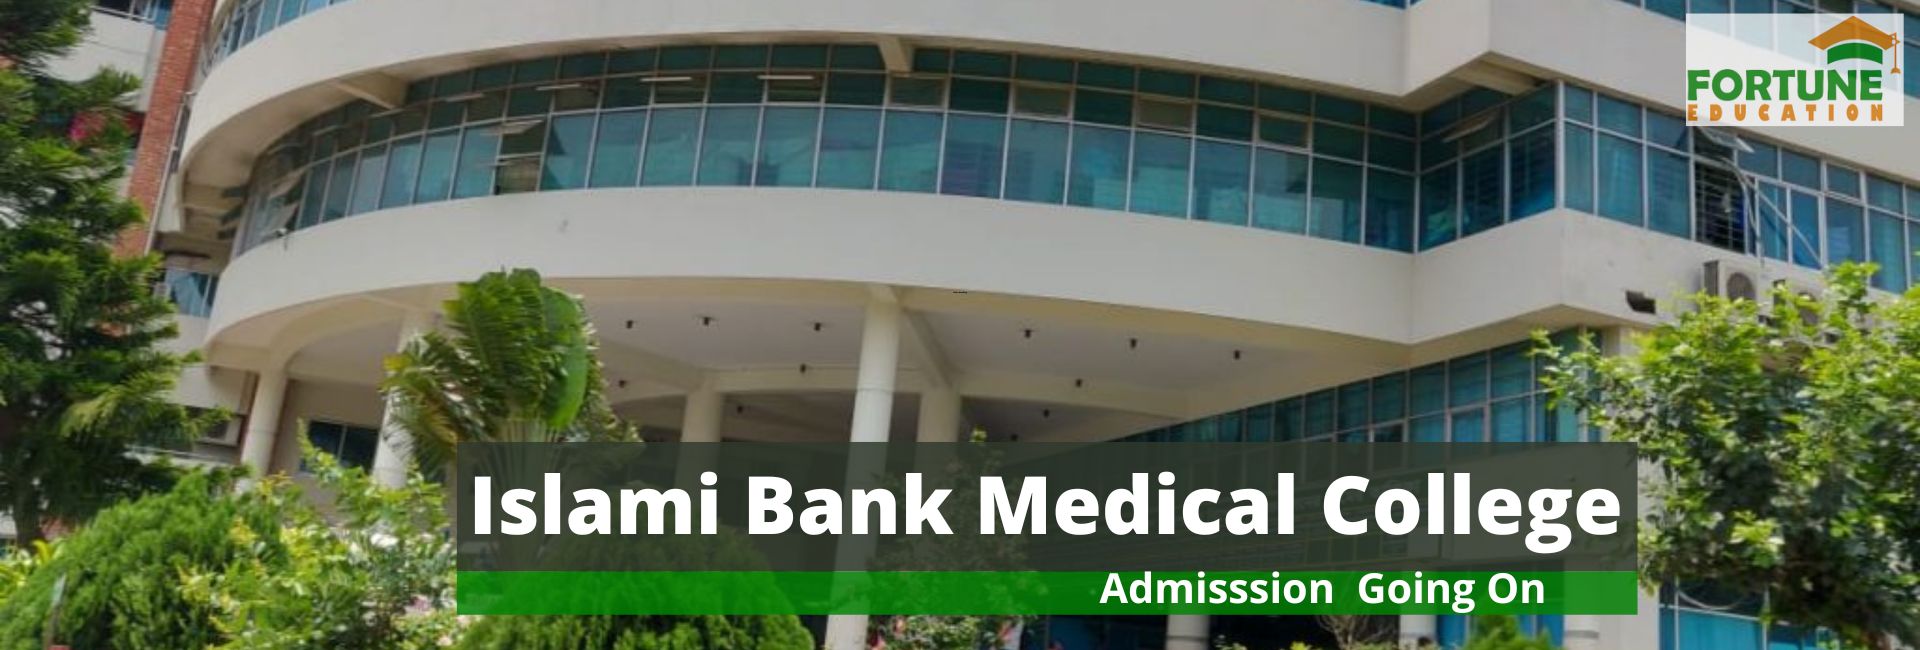 Islami Bank Medical College Bangladesh